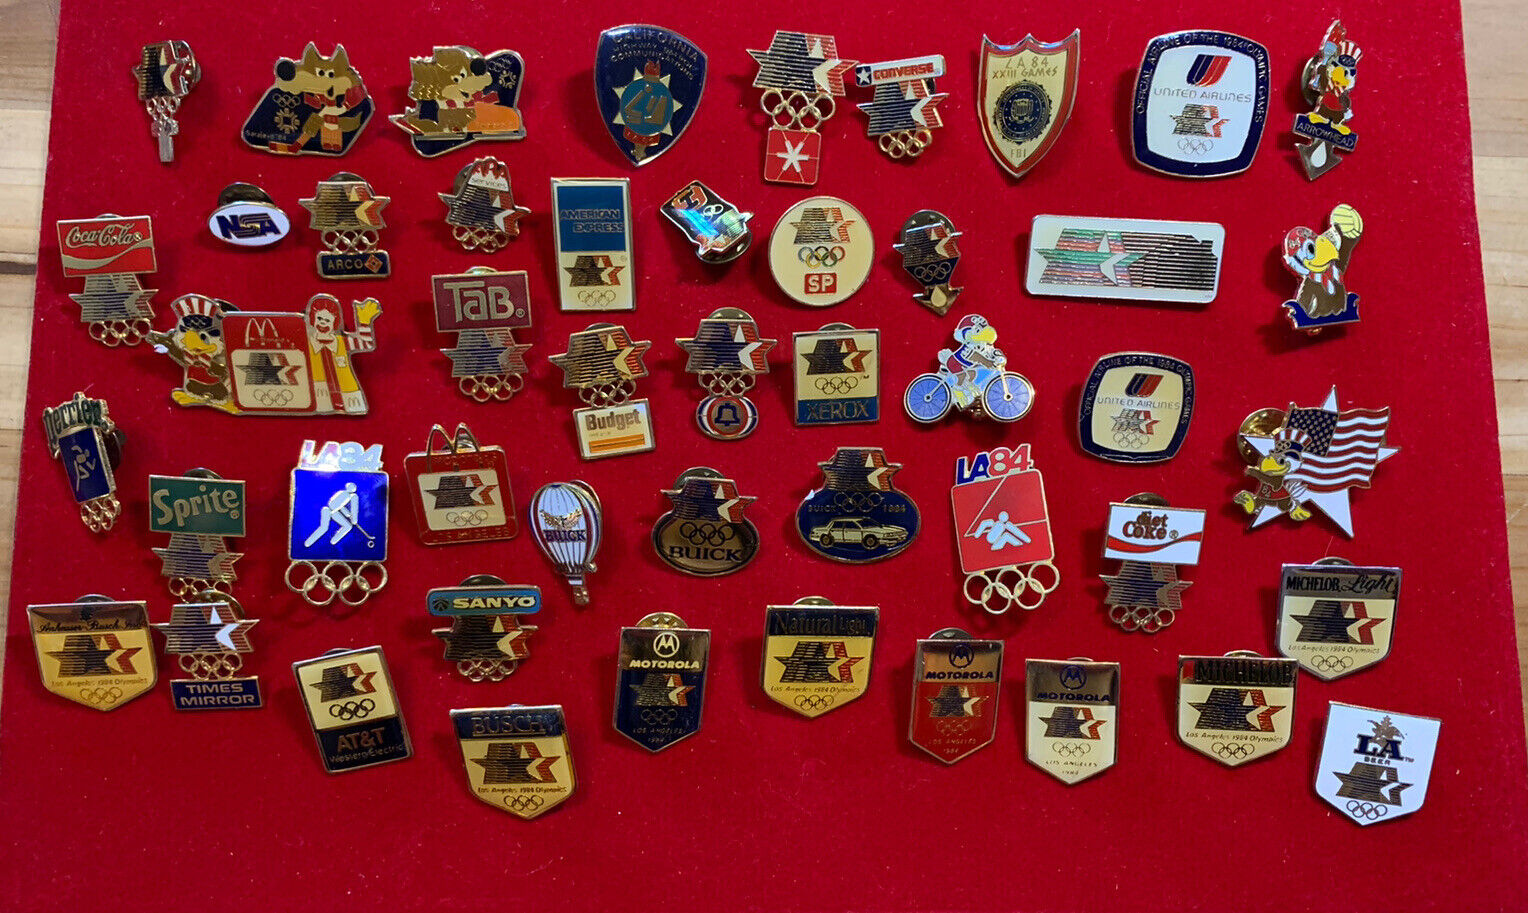 1984 los angeles olympics pin Lot - 48 Pins Total Includes Coke McDonald Rare